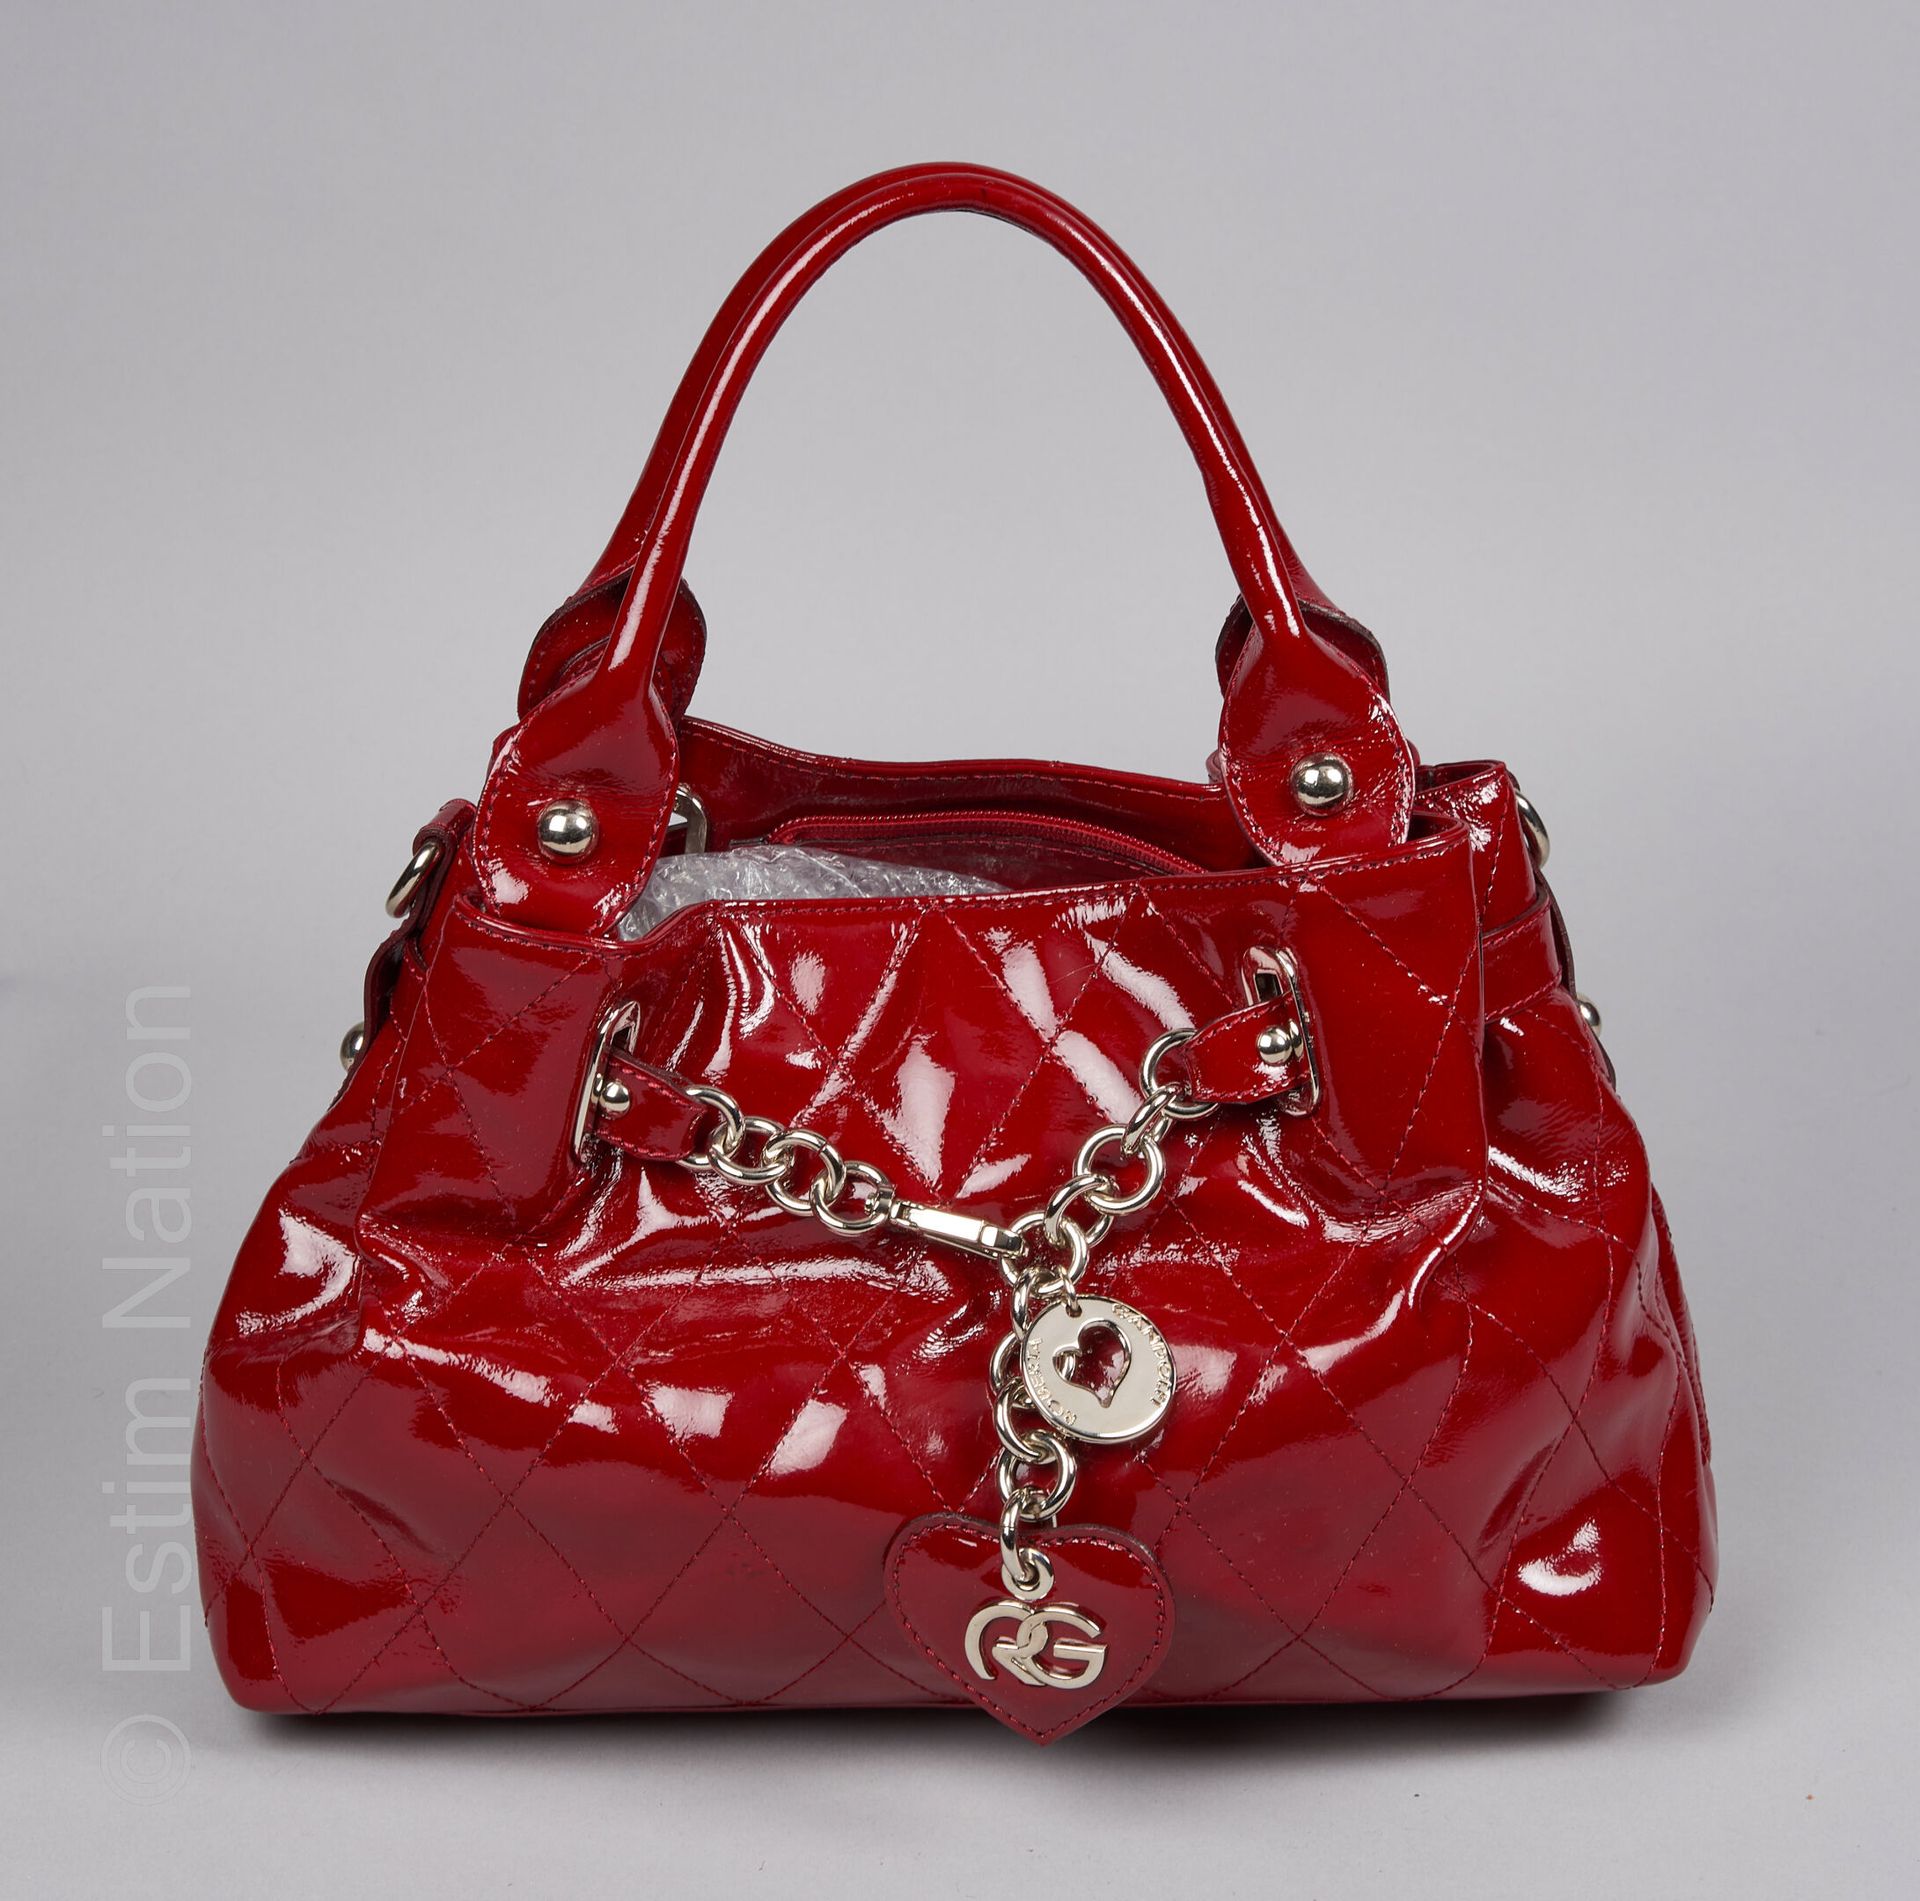 ROBERTA GANDOLFI BAG in red patent leatherette, chrome trim (20 x 33 x 12 cm) (s&hellip;